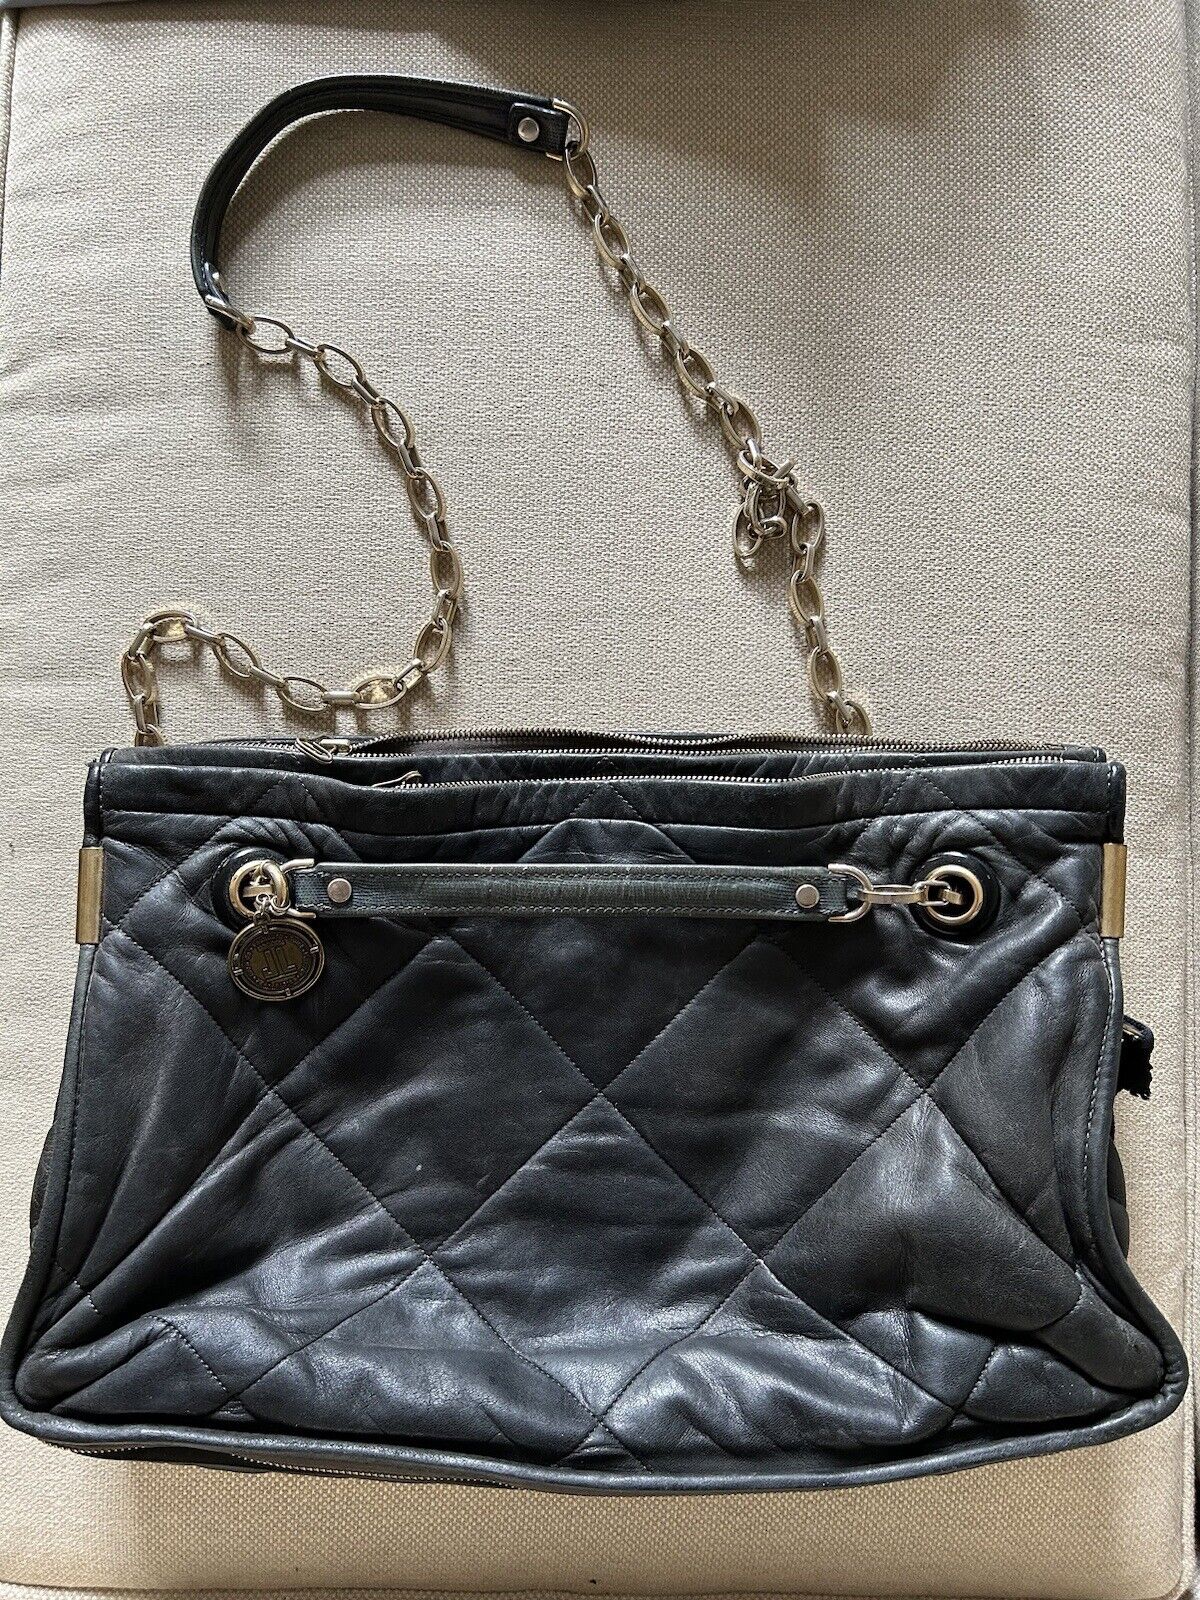 Lanvin Amalia Black Quilted Leather Chain Medium Shoulder Hand Bag Authentic